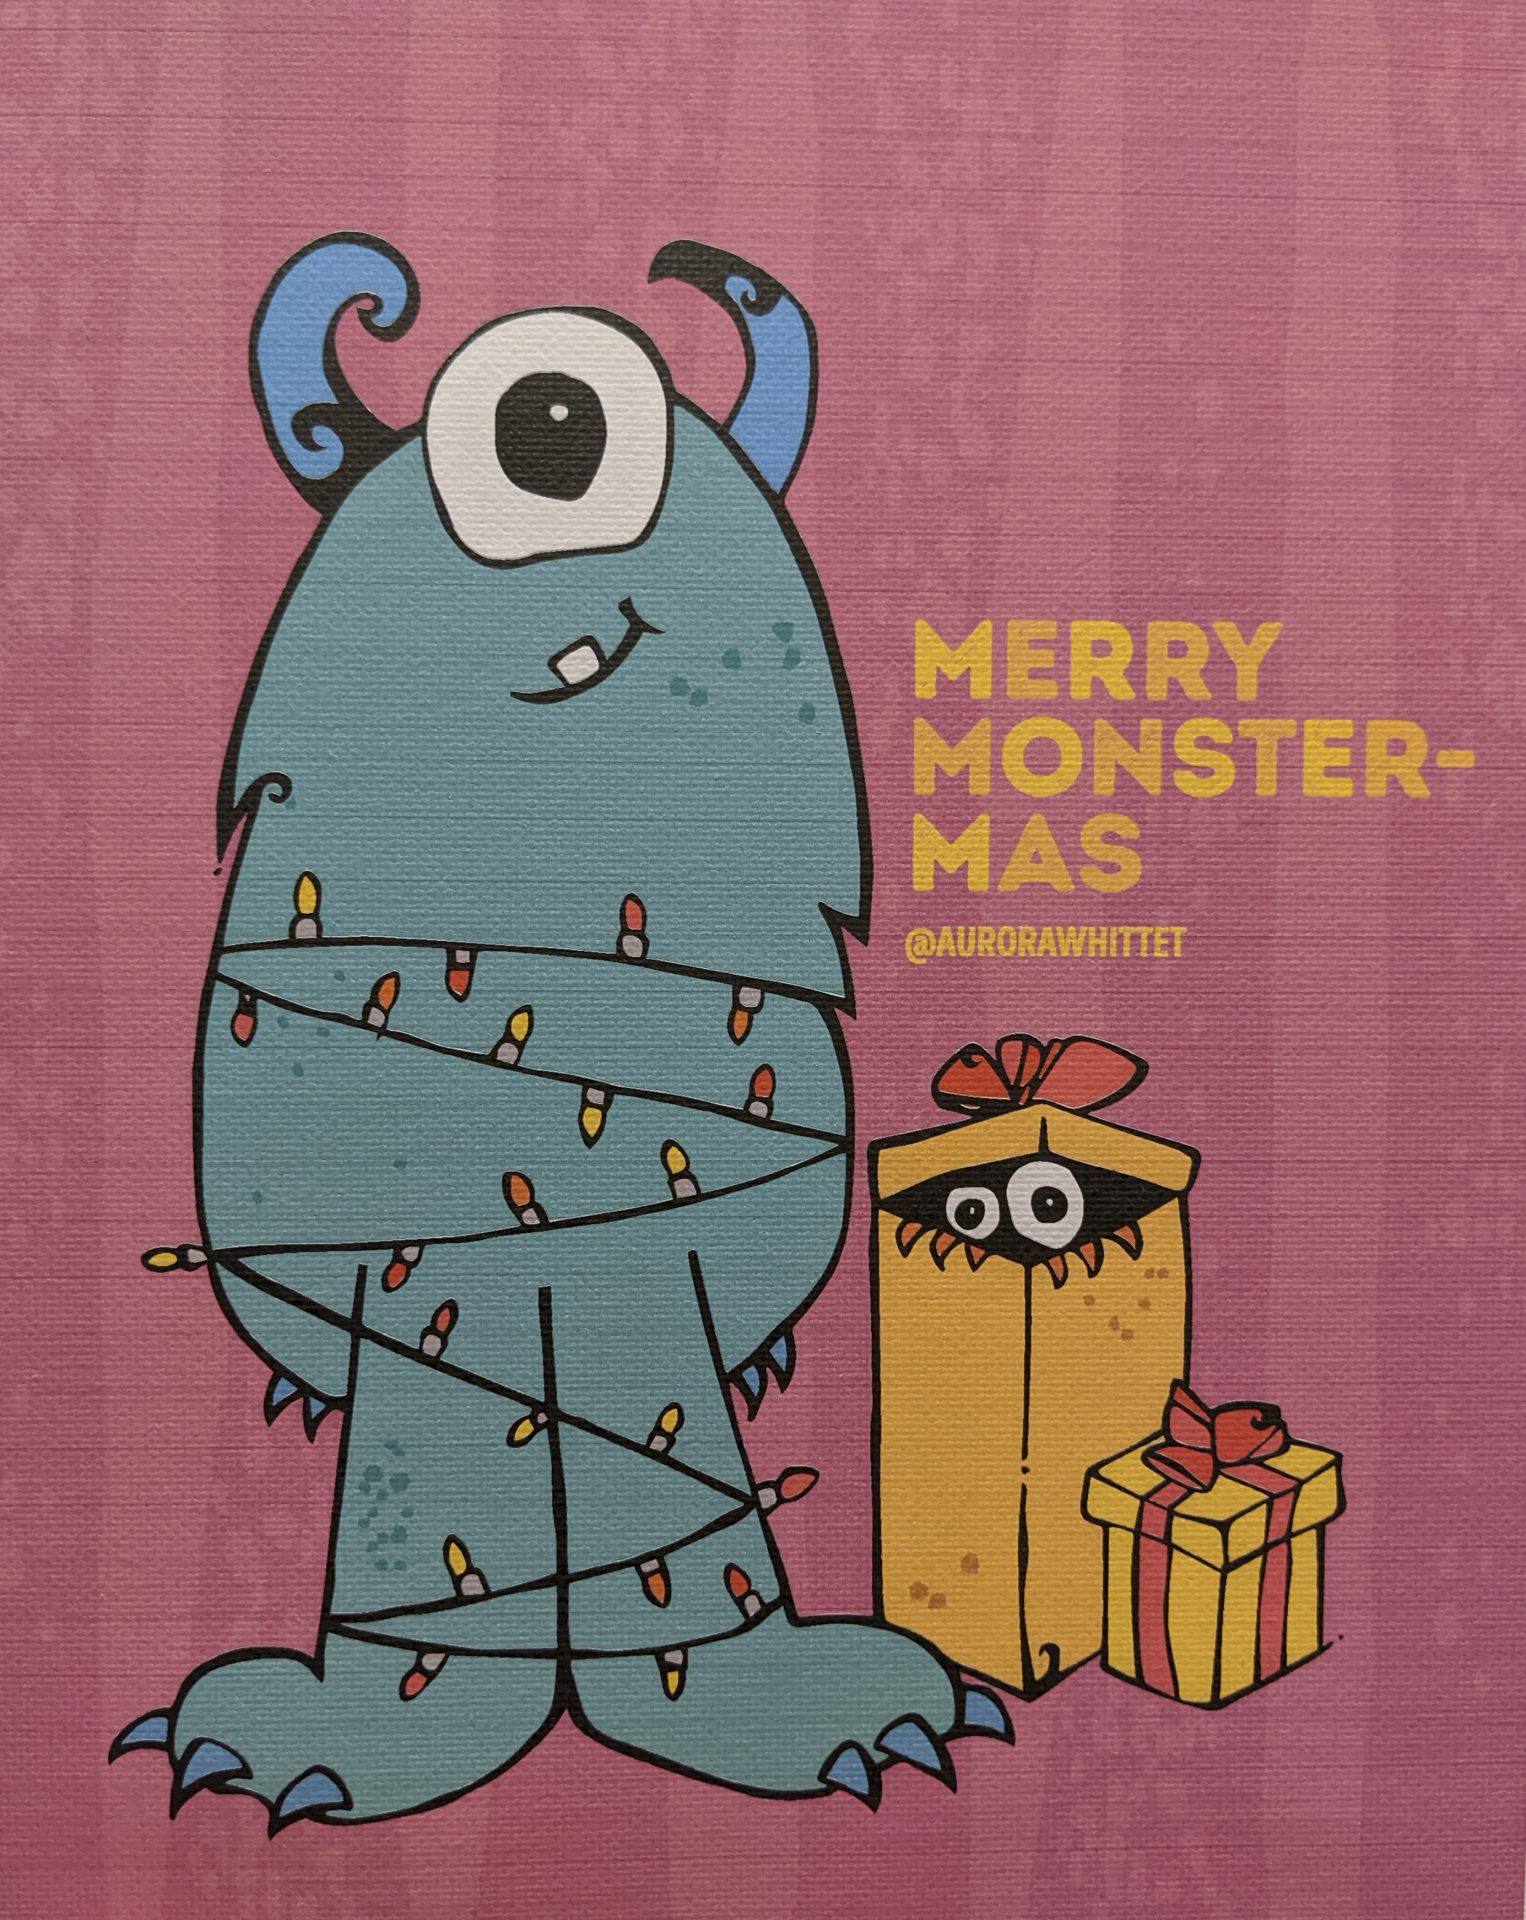 Merry Monstermas Monstertude